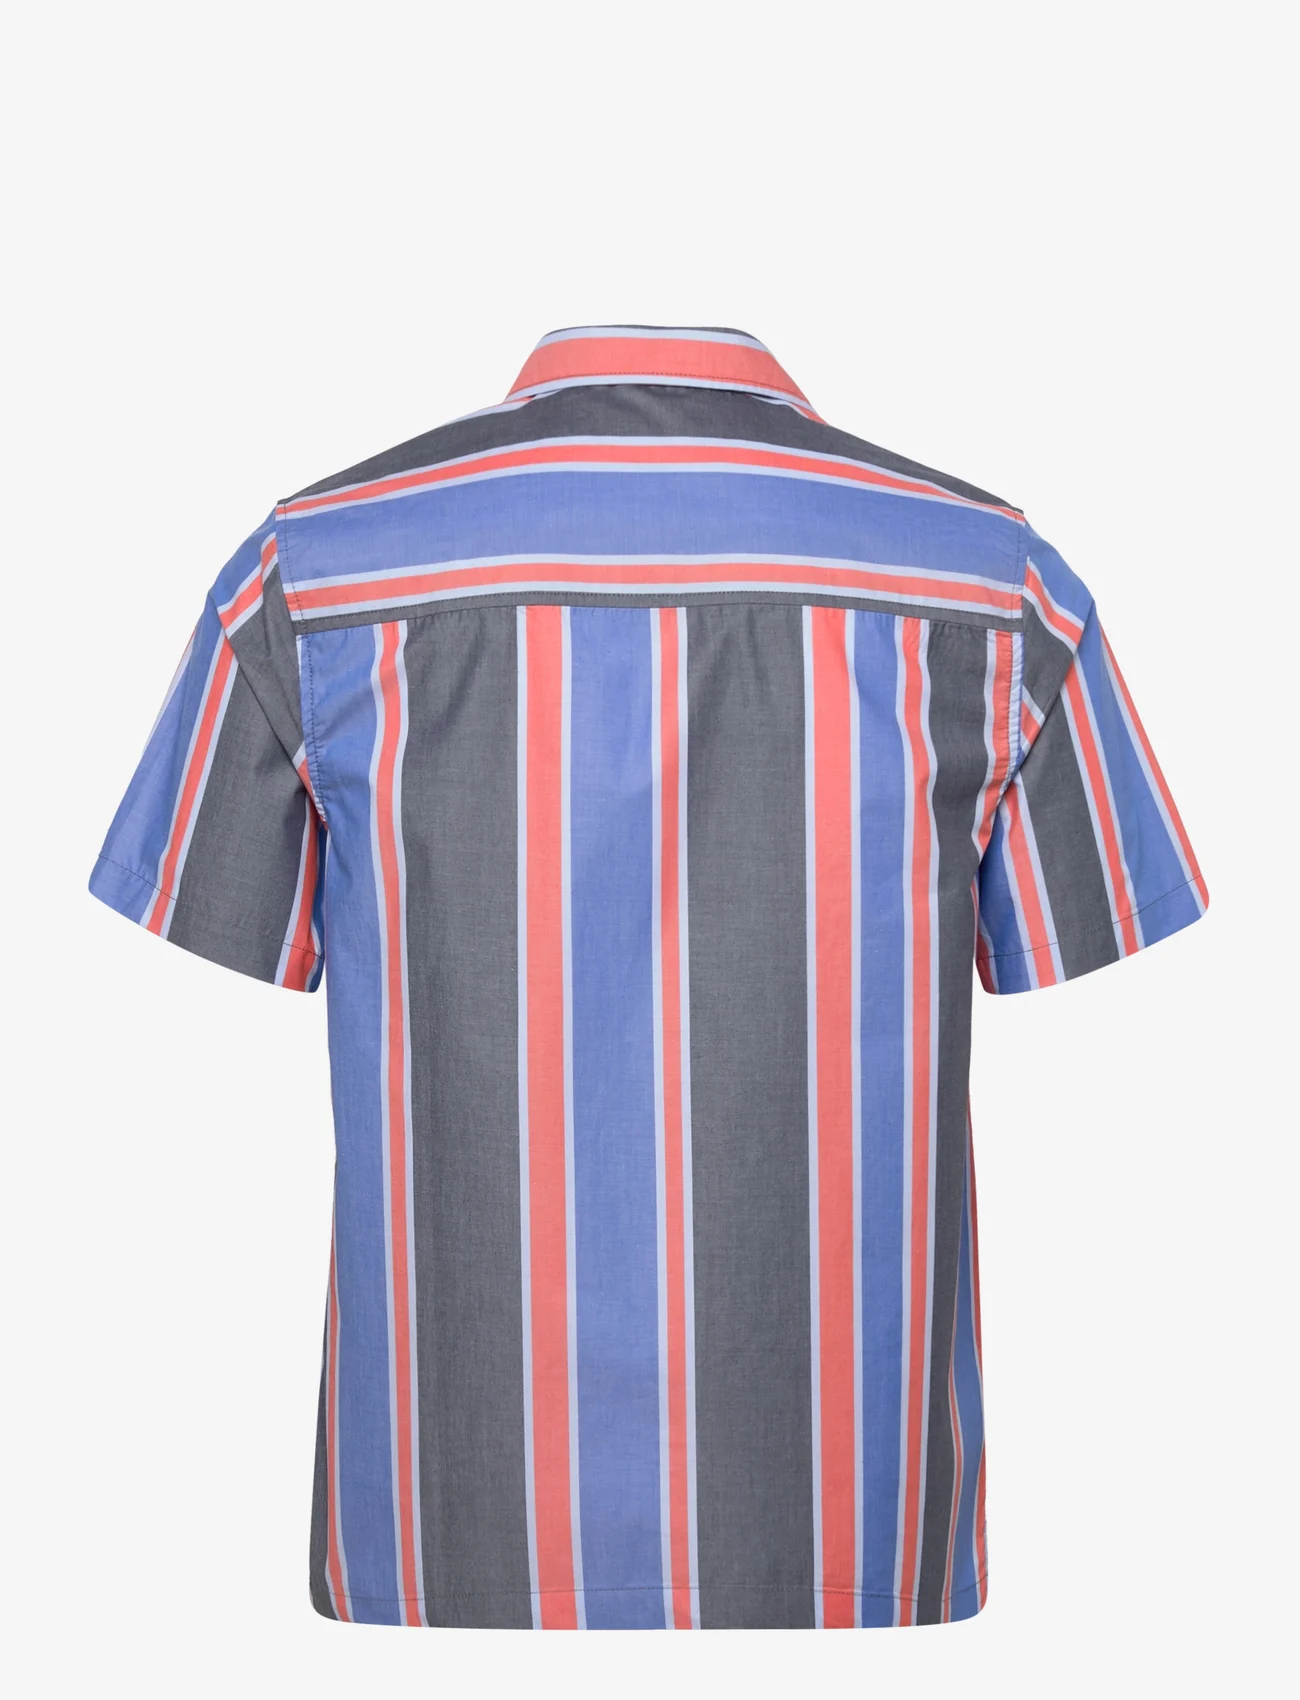 Lyle & Scott - Vertical Stripe Resort Shirt - kortärmade skjortor - flyer red/ spring blue - 1